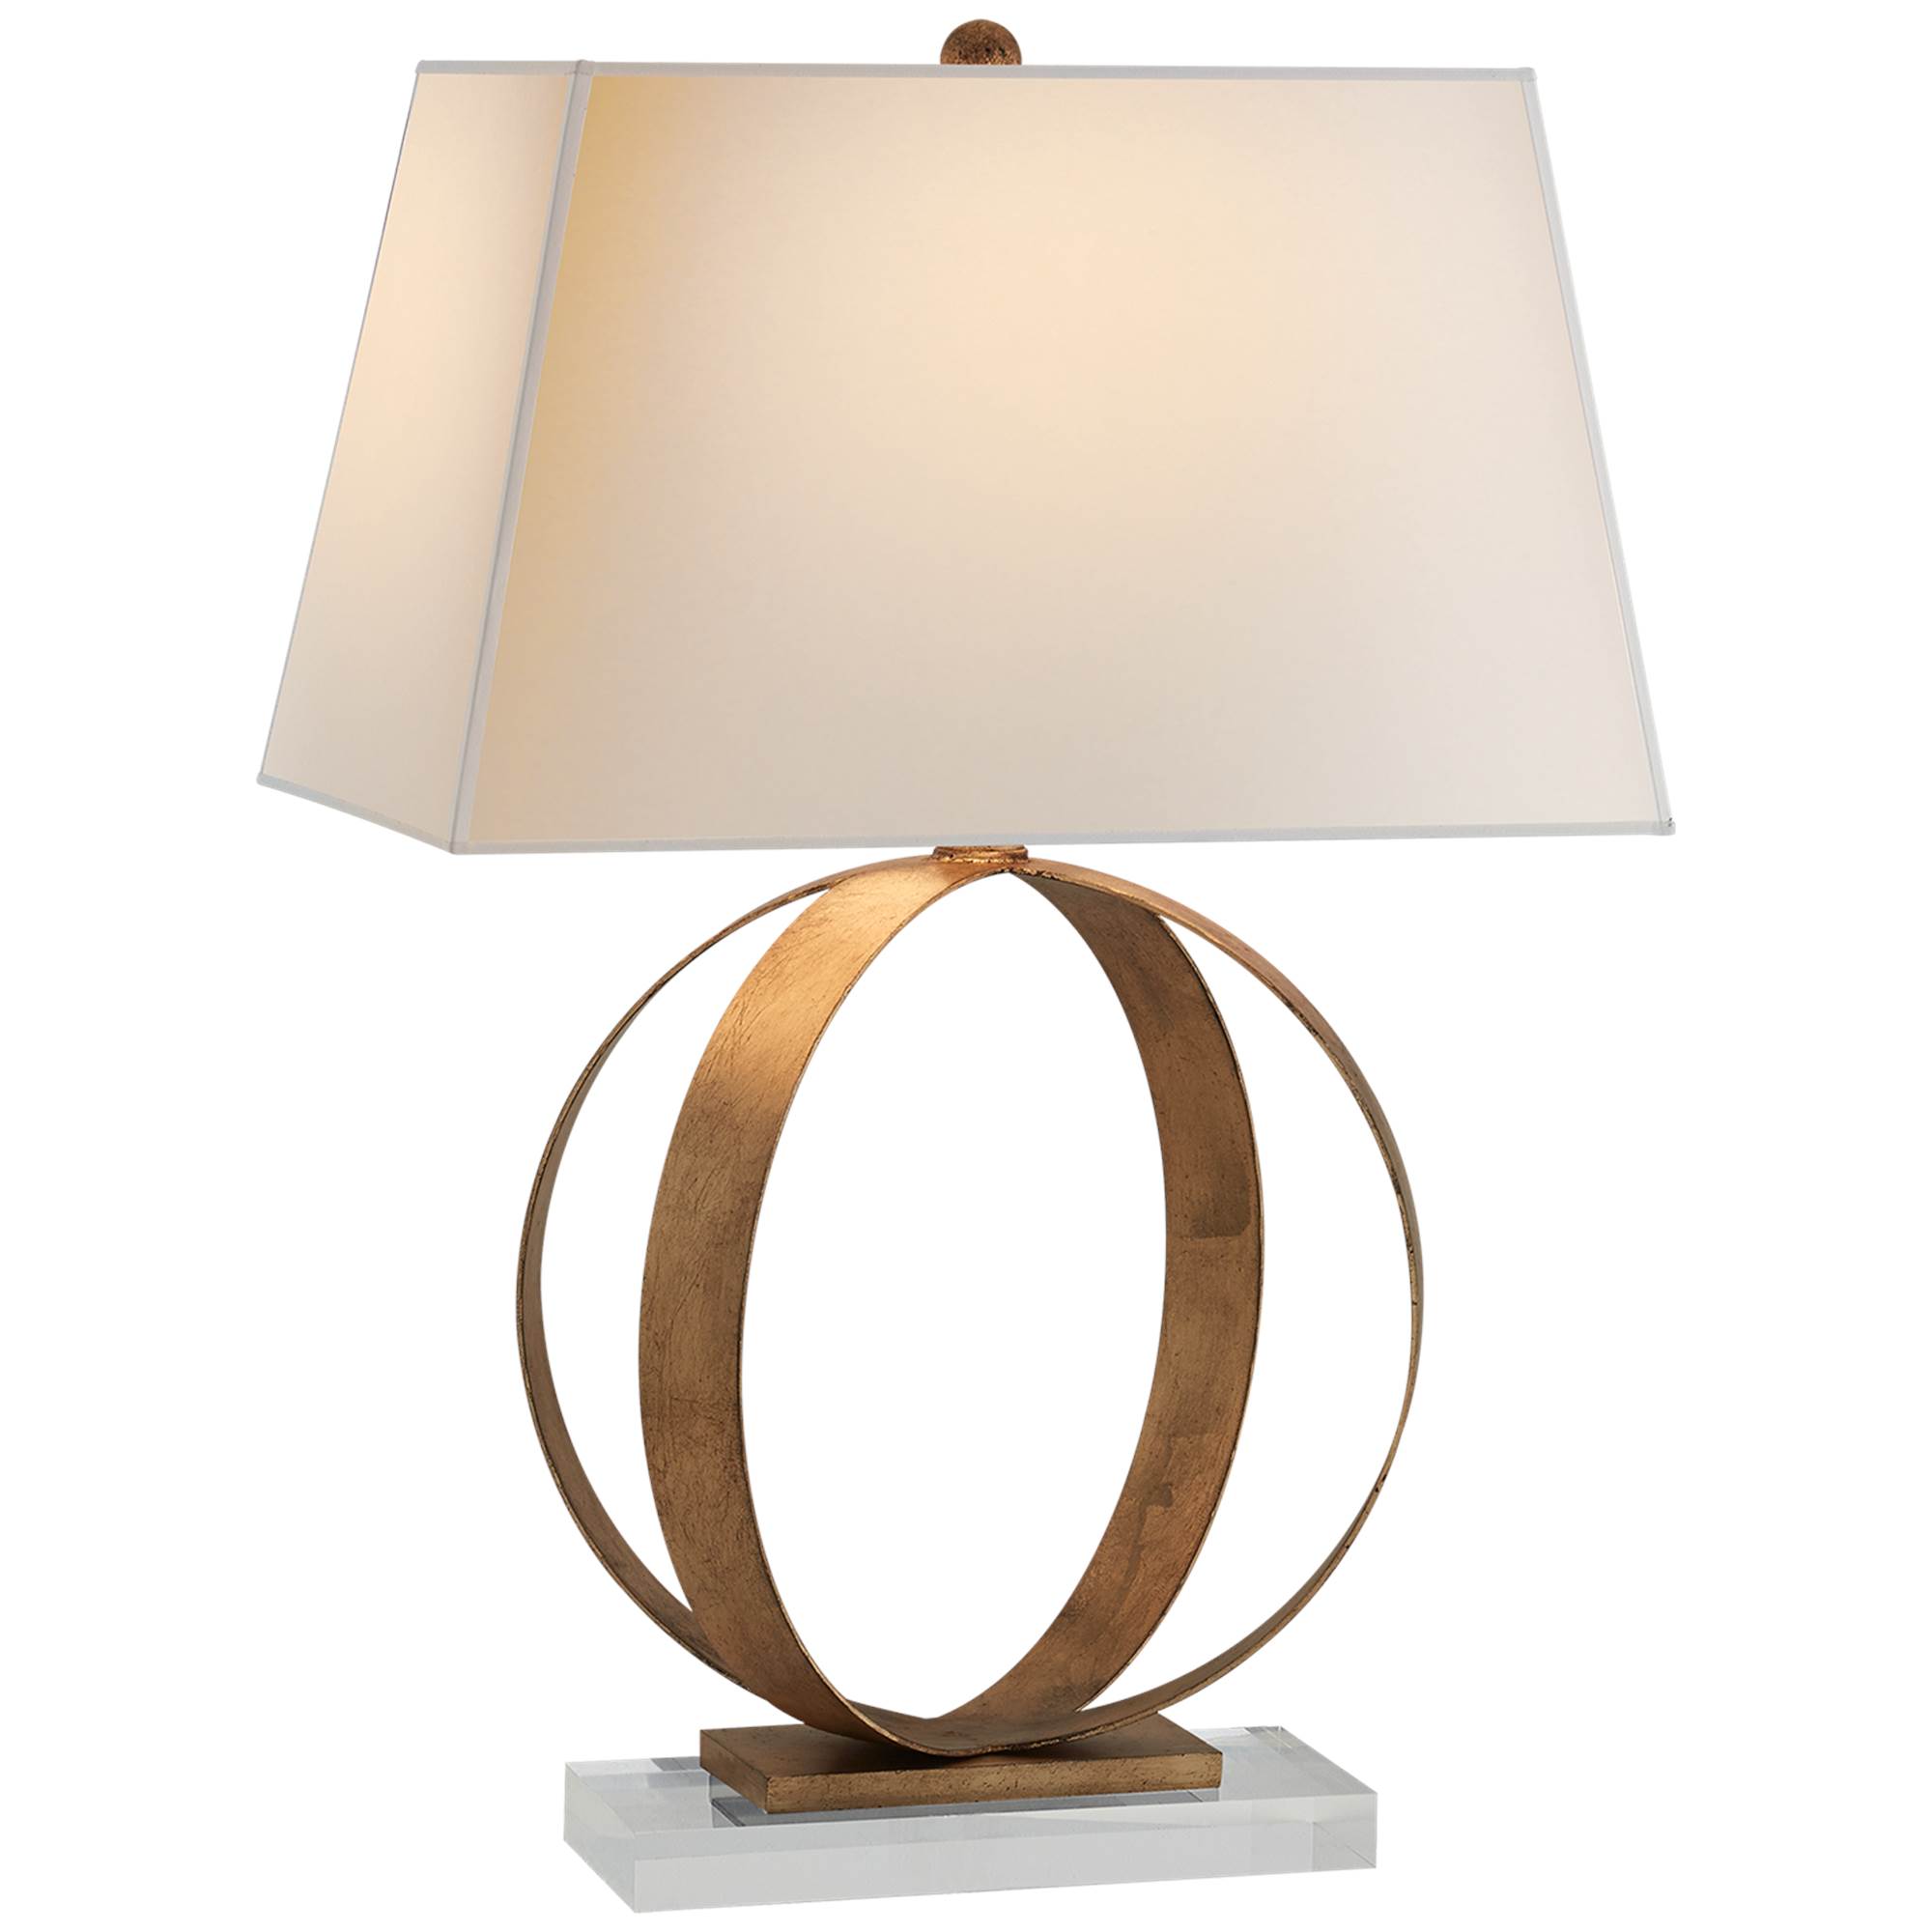 Visual Comfort Dixon Tall Table Lamp with Natural Paper Shade